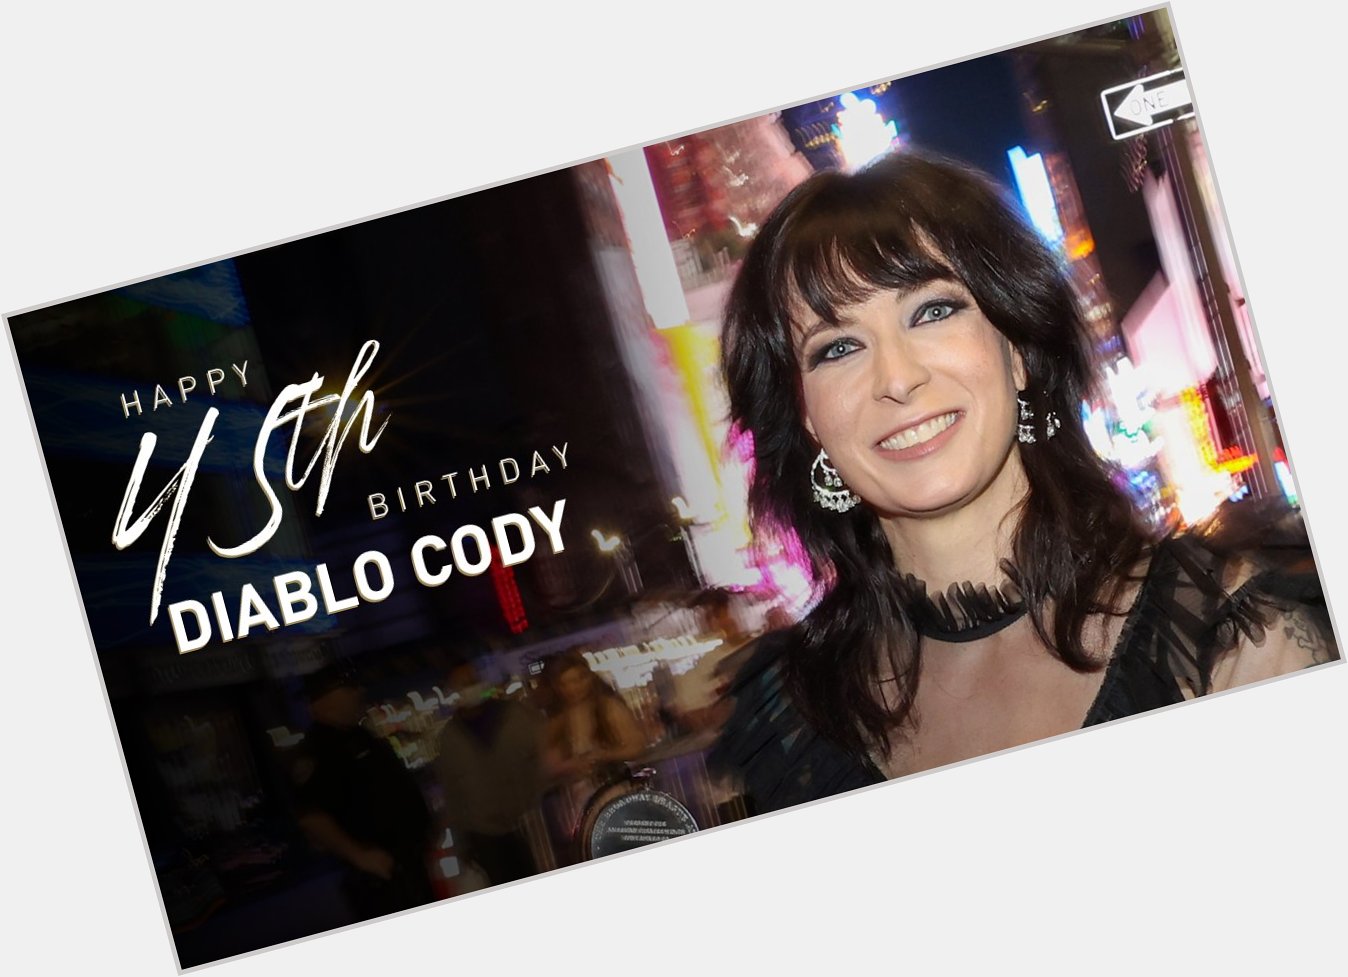 Happy 45th birthday Diablo Cody! 

Read her bio here:  